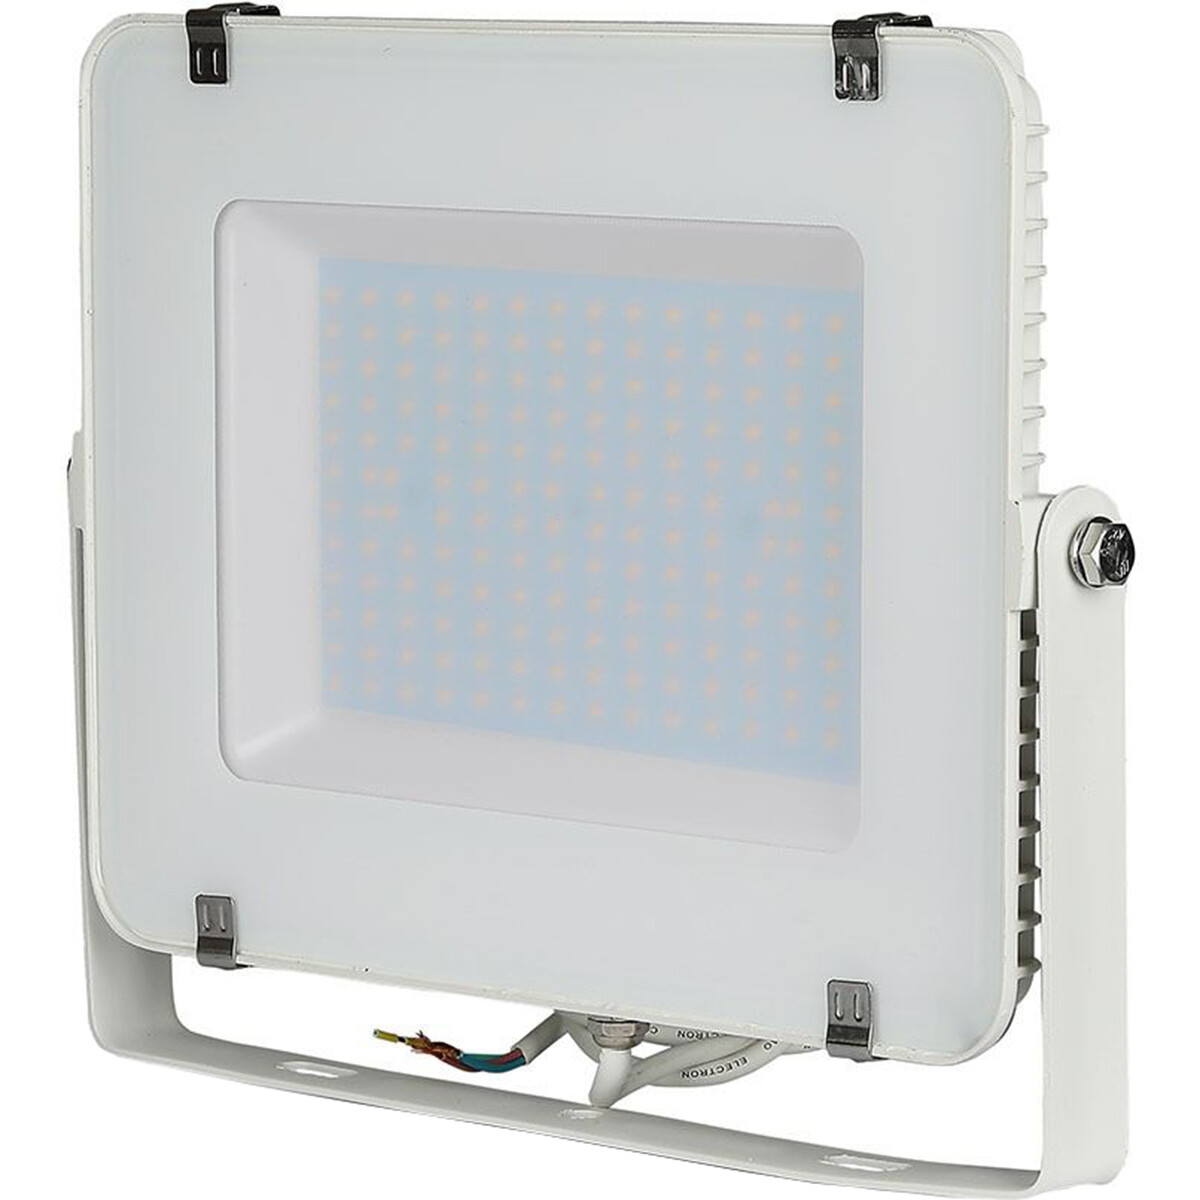 LED Bouwlamp 150 Watt - LED Schijnwerper - Viron Hisal - Helder/Koud Wit 6400K - Waterdicht IP65 - M